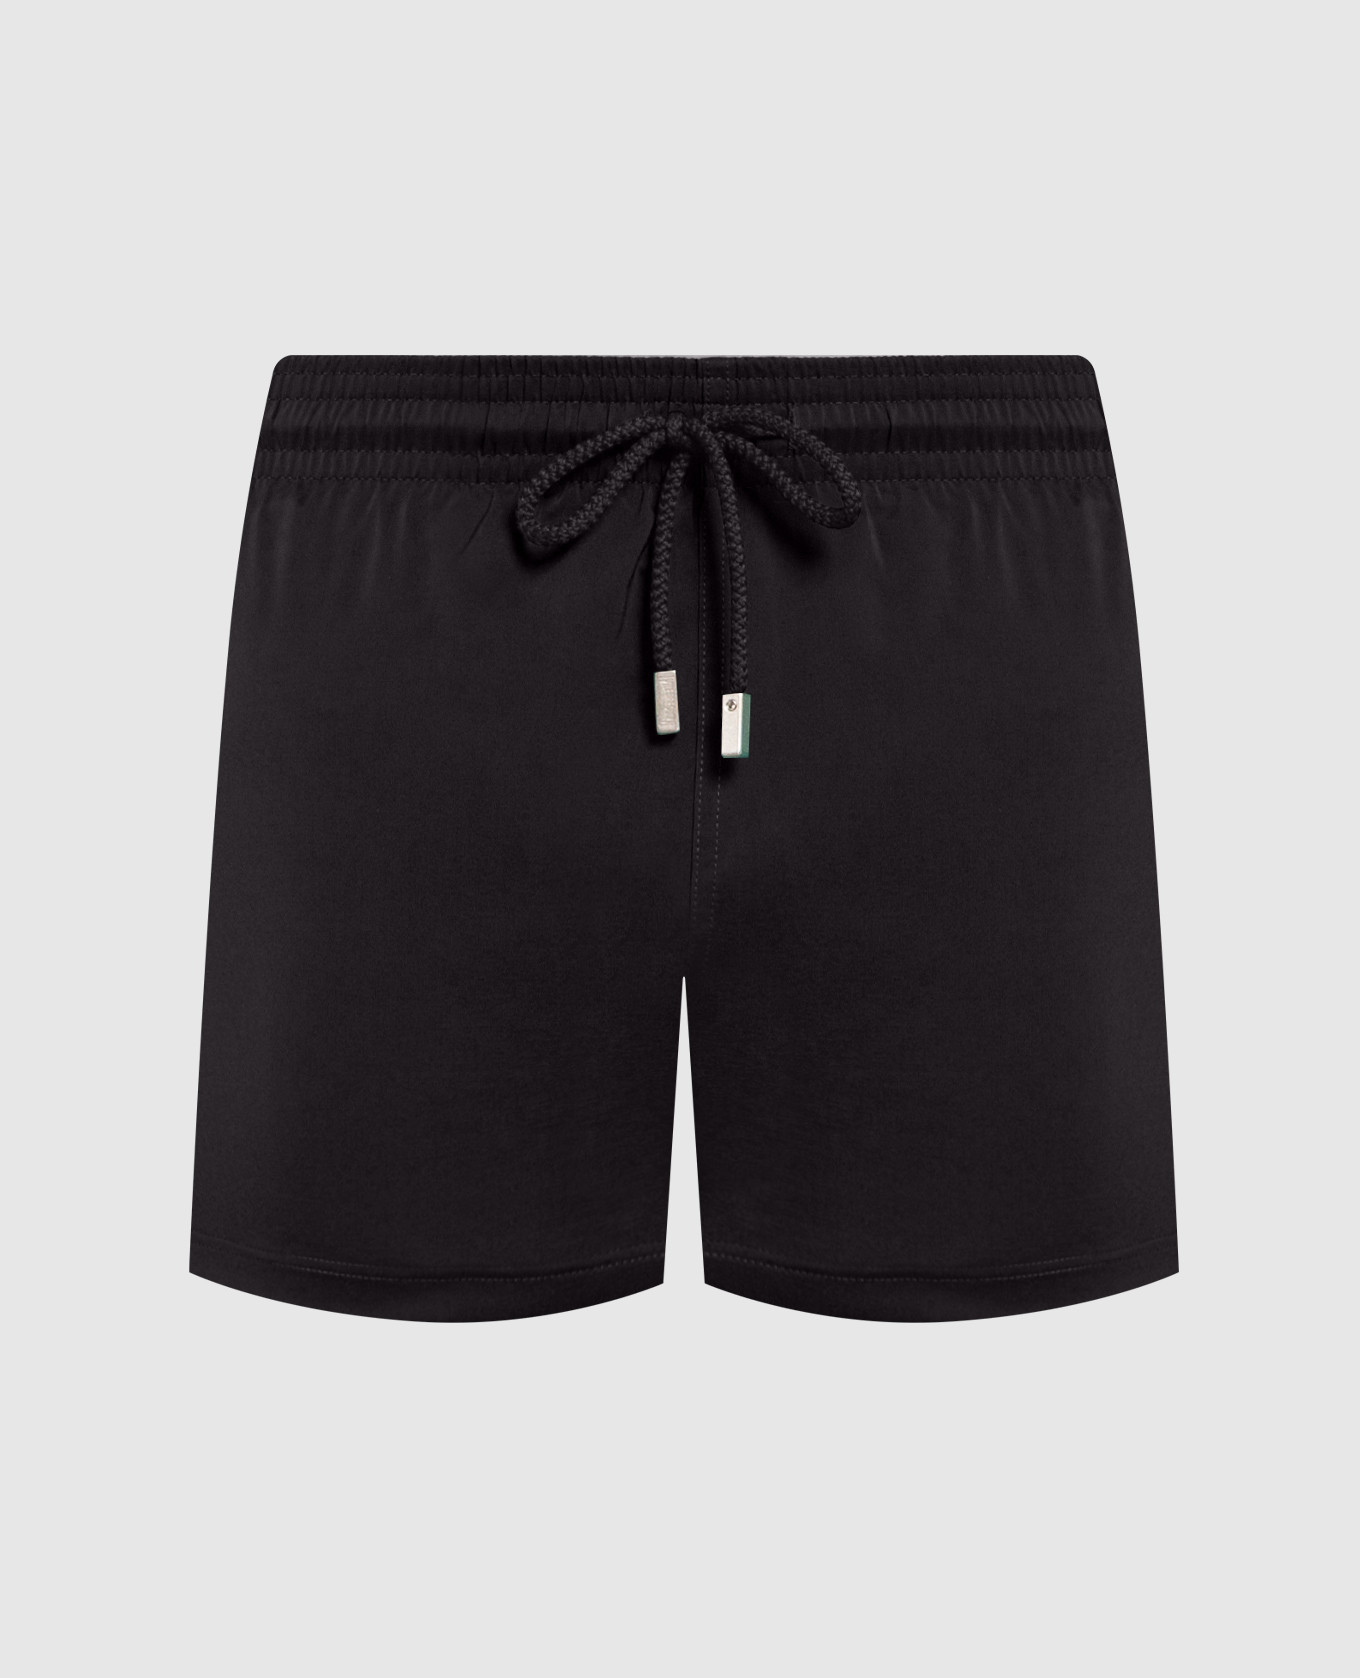 Moorea Black Swim Shorts